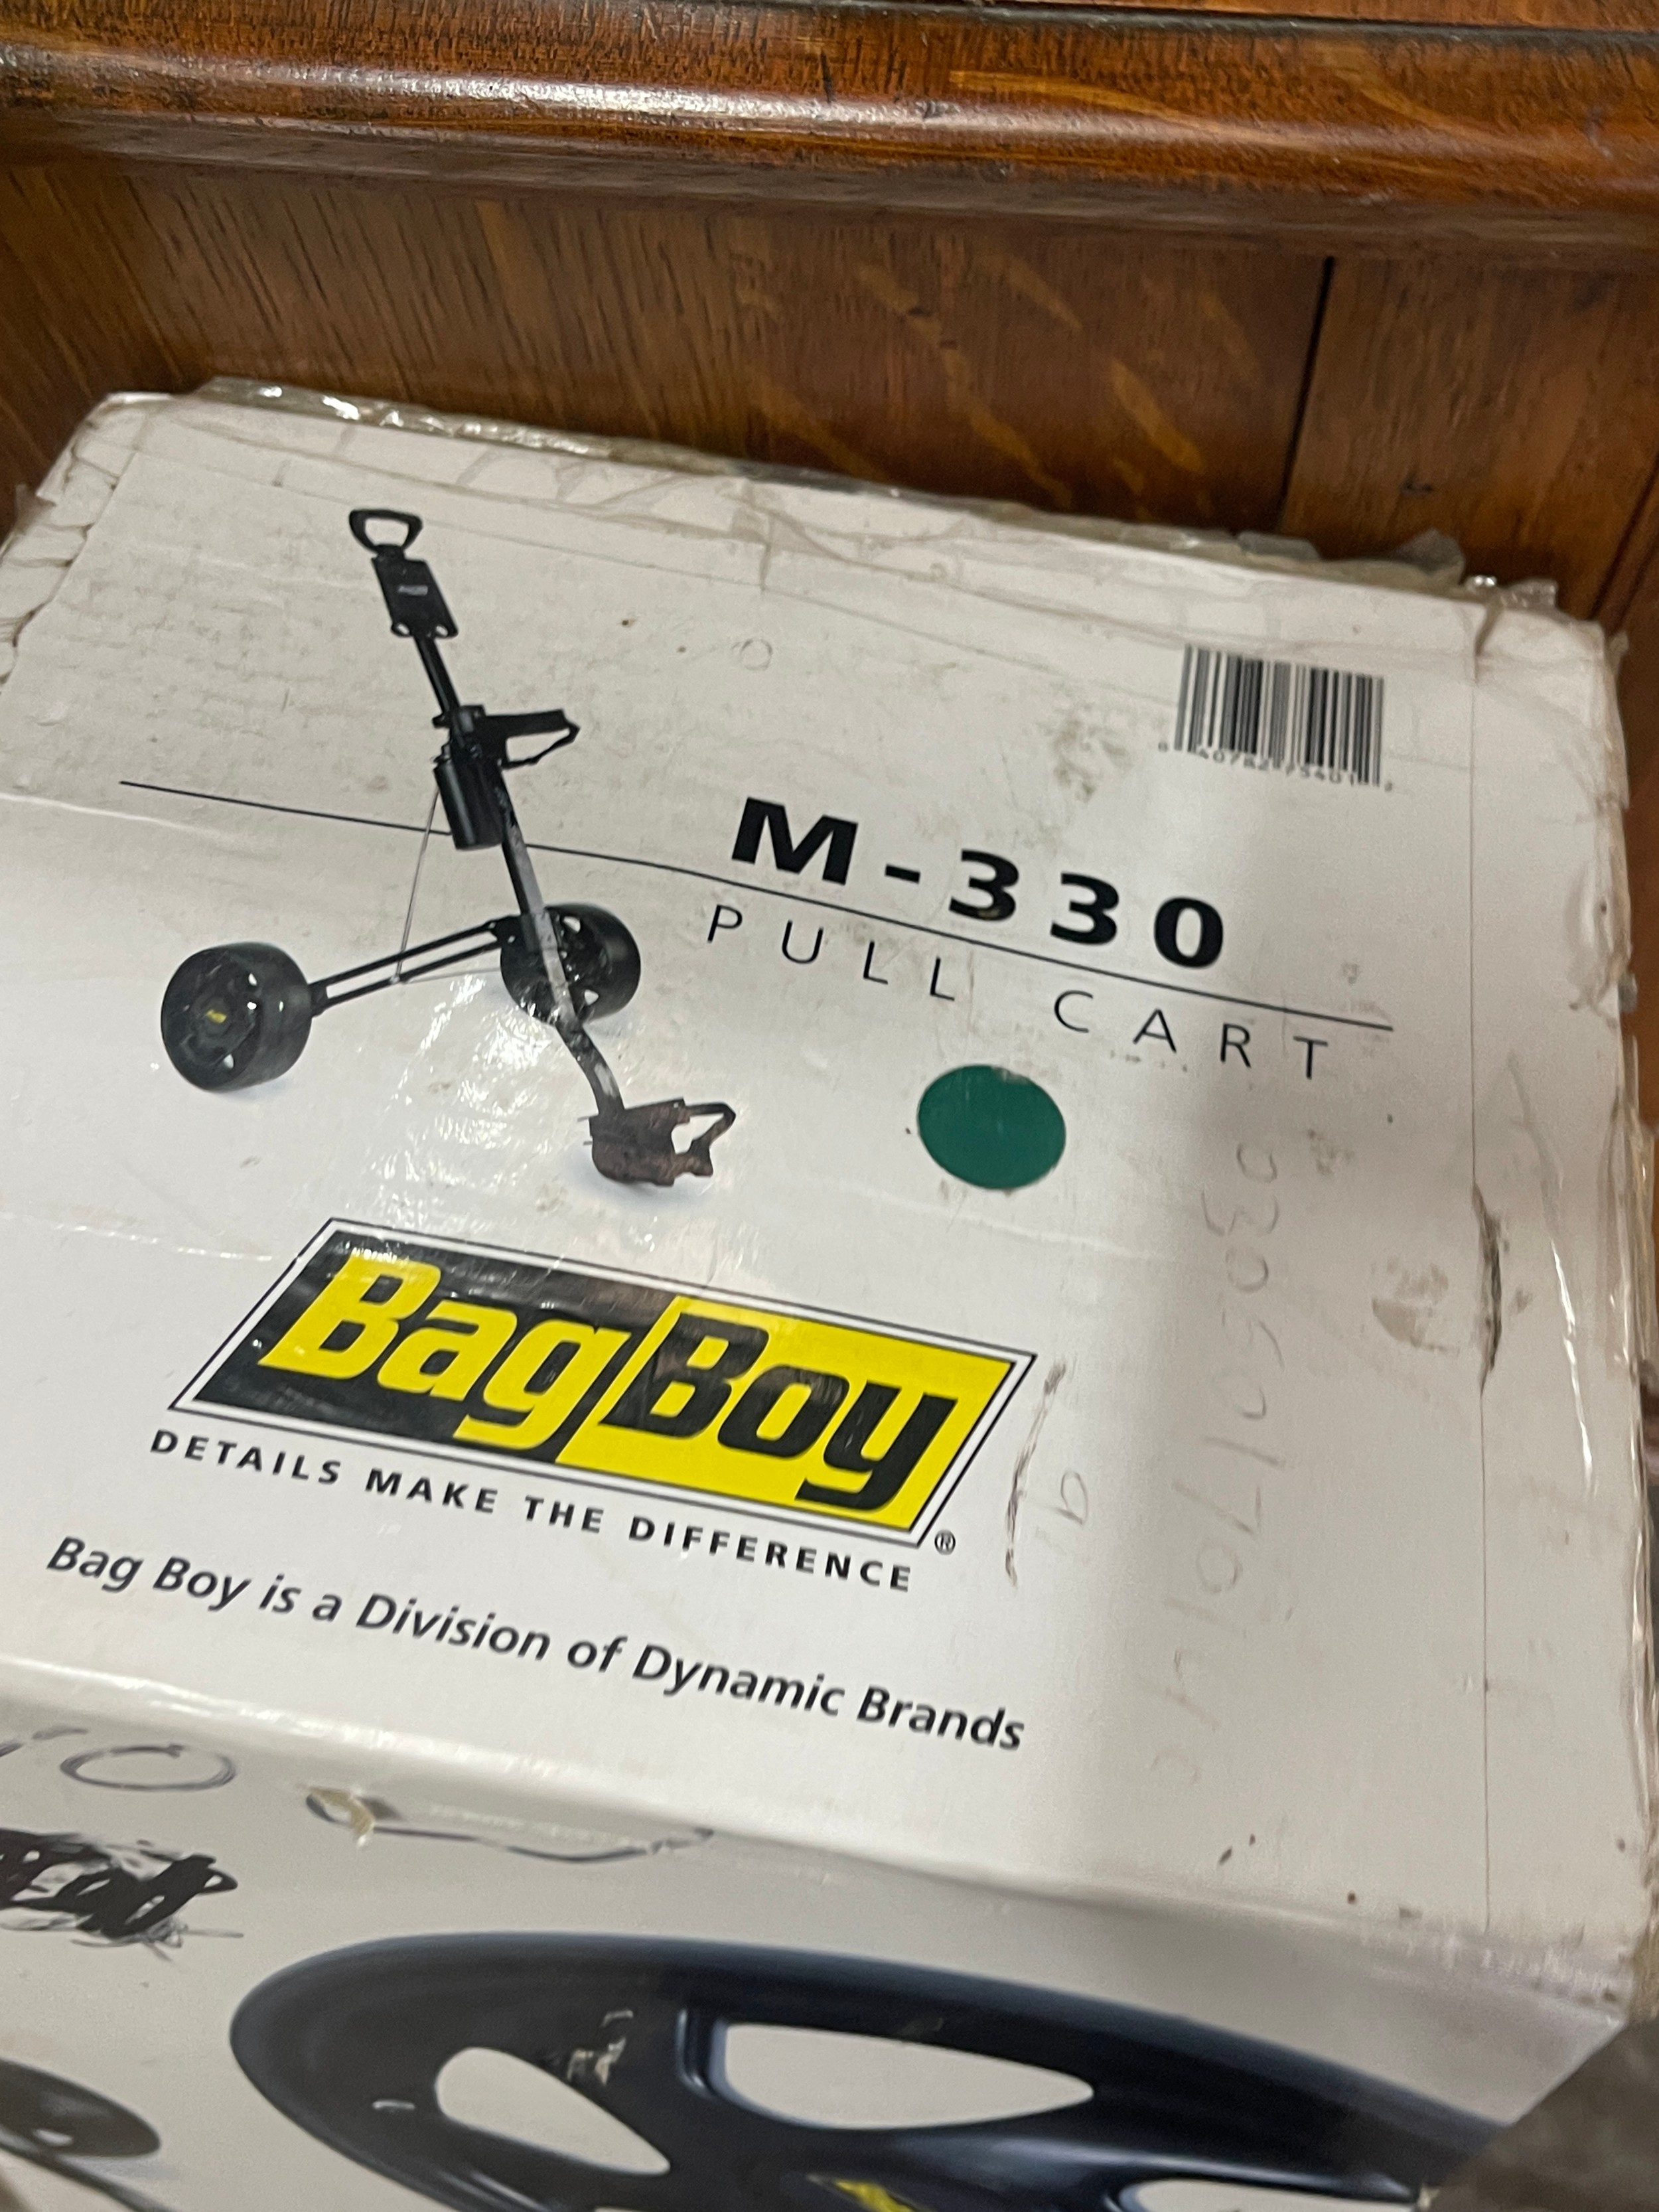 Brand new in the box bag boy pull cart m-330 - Bild 2 aus 2